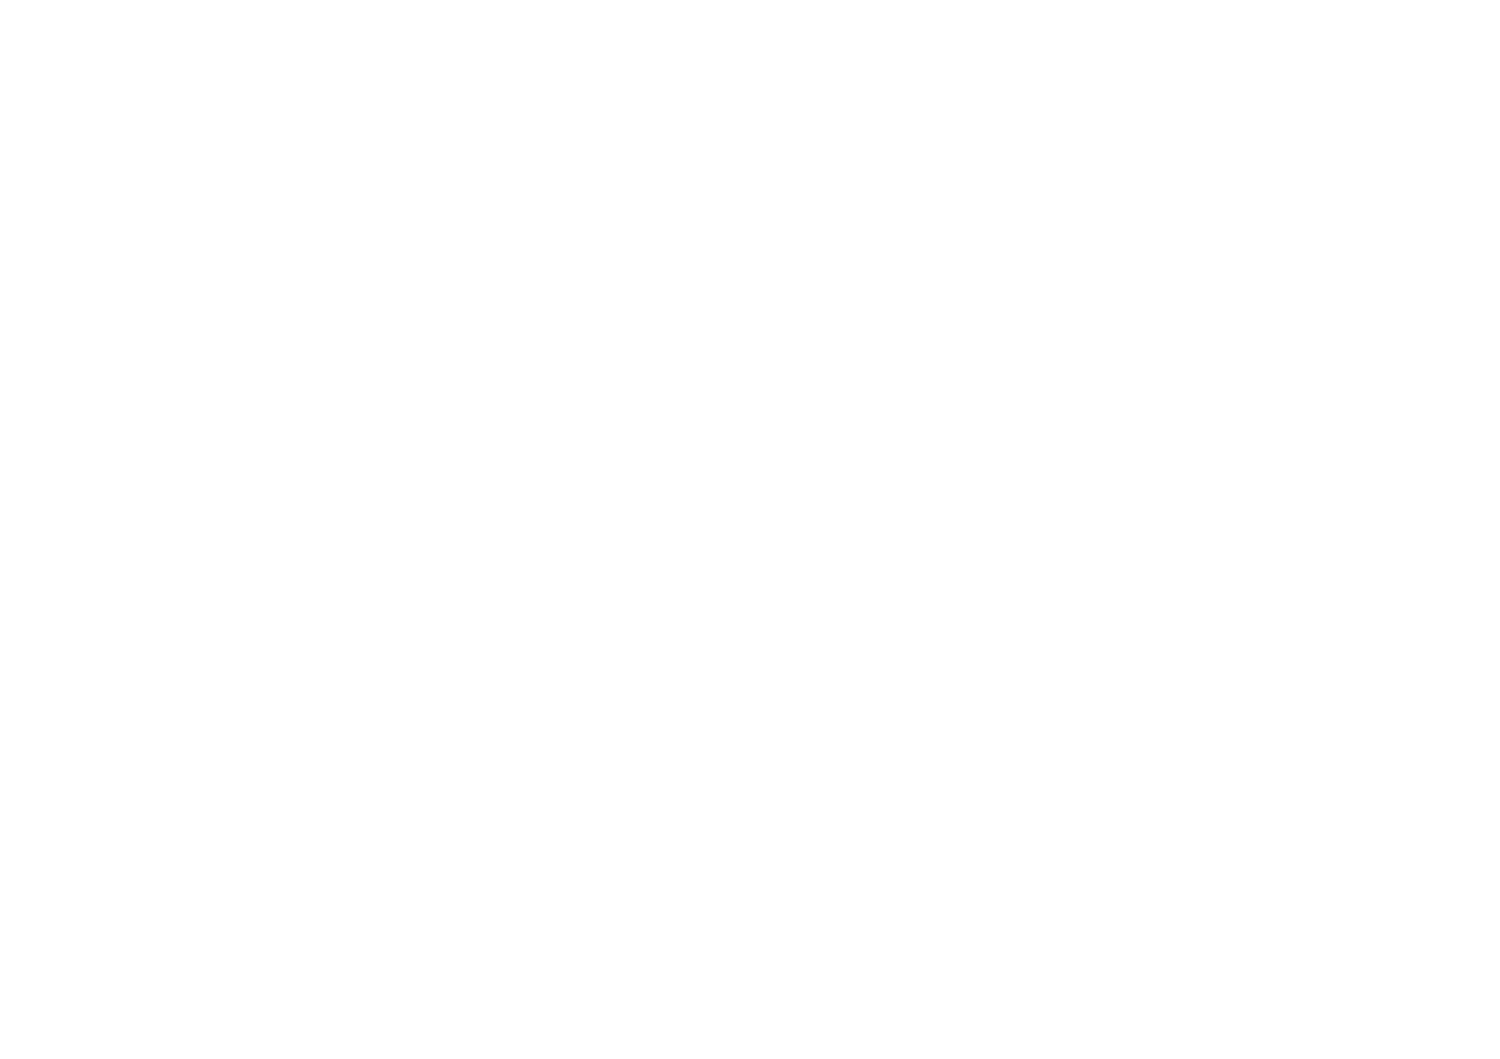 Nolasco Image